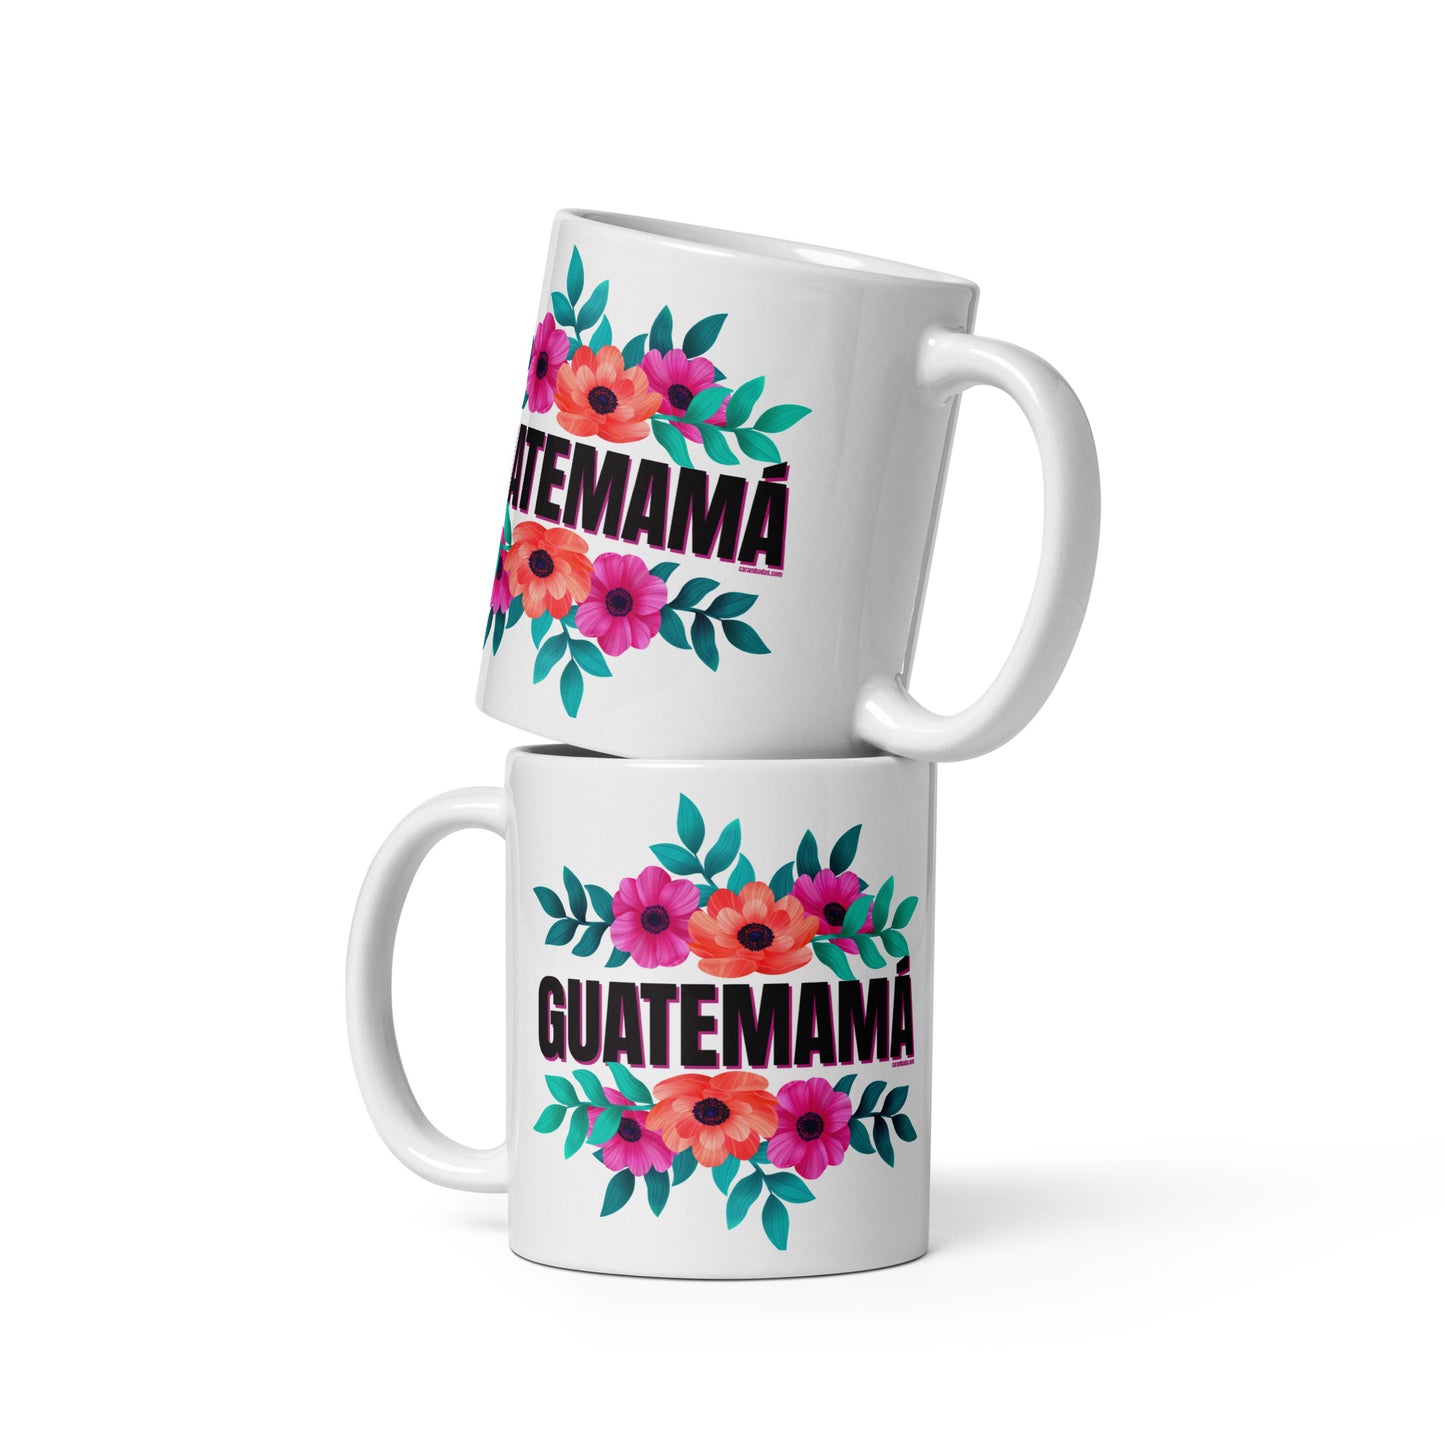 GUATEMAMÁ - White glossy mug